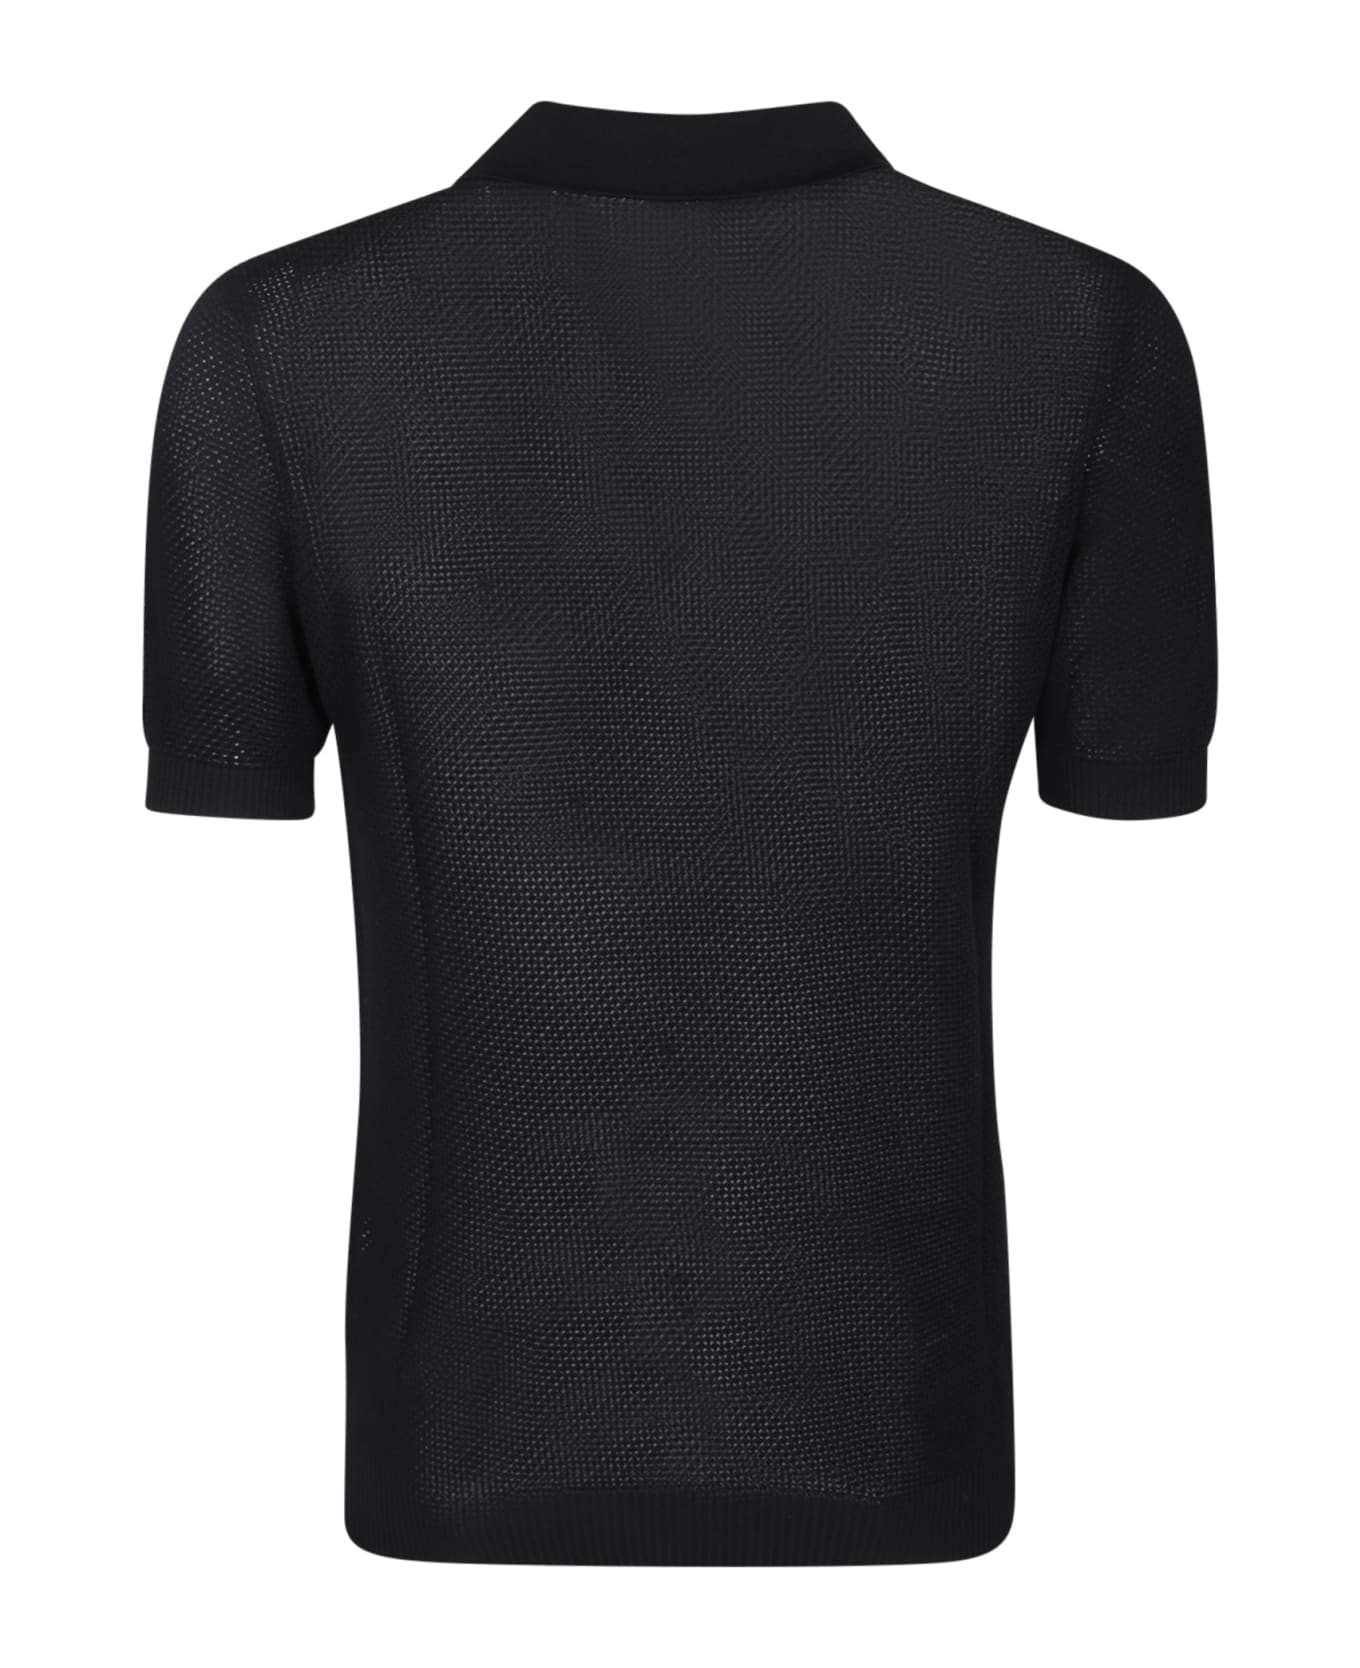 Tagliatore Crochet Black Polo Shirt - Black ポロシャツ